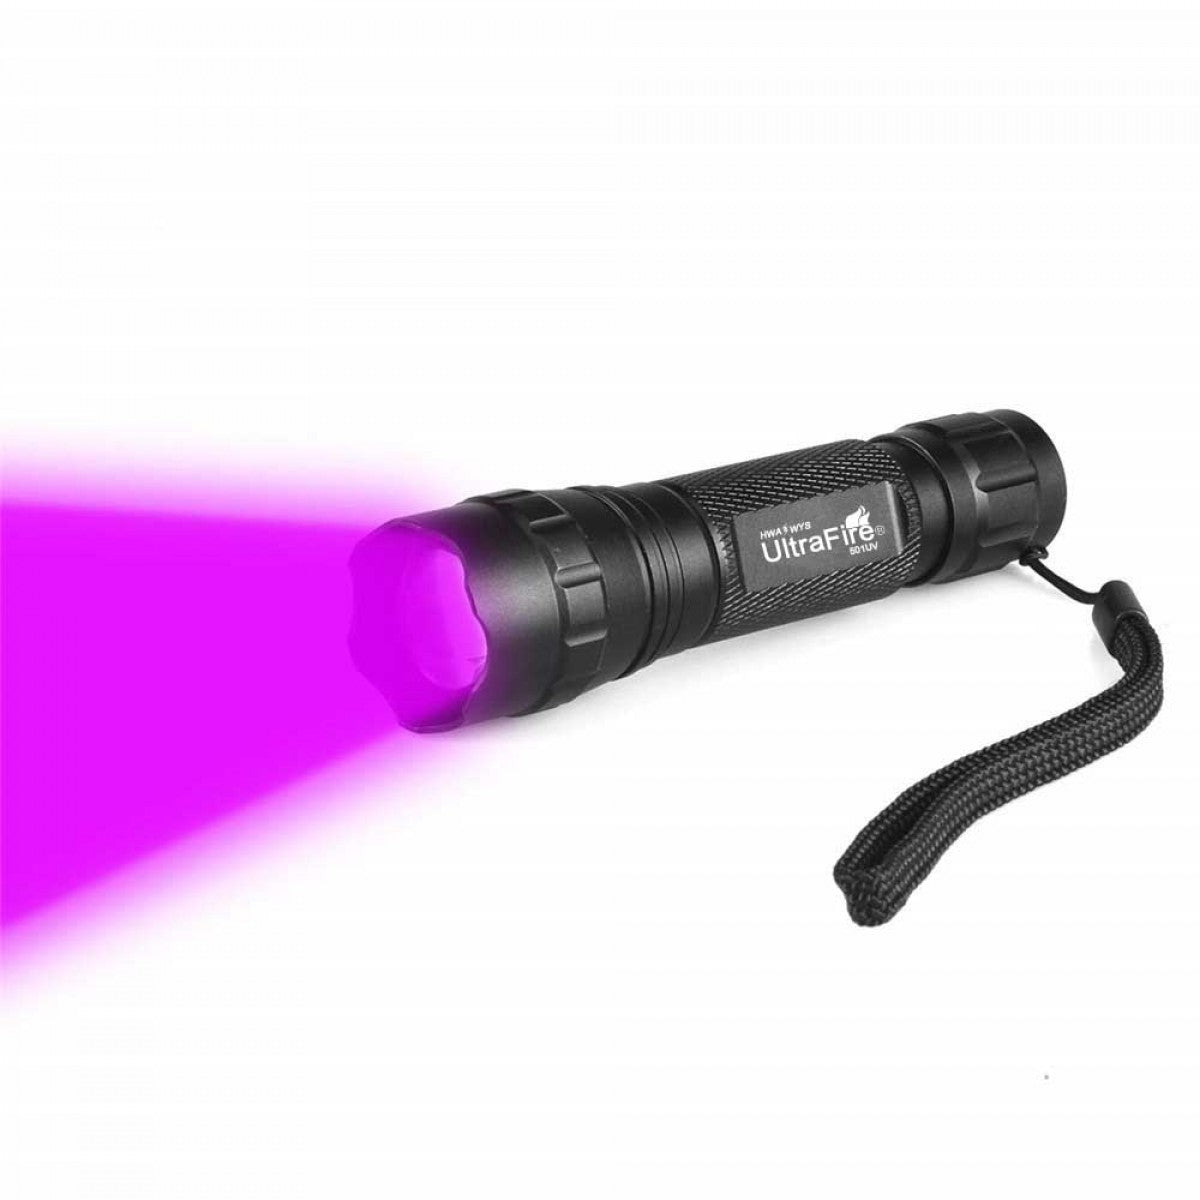 UltraFire 501UV  Focusing Waterproof Outdoor Purple Light Flashlight